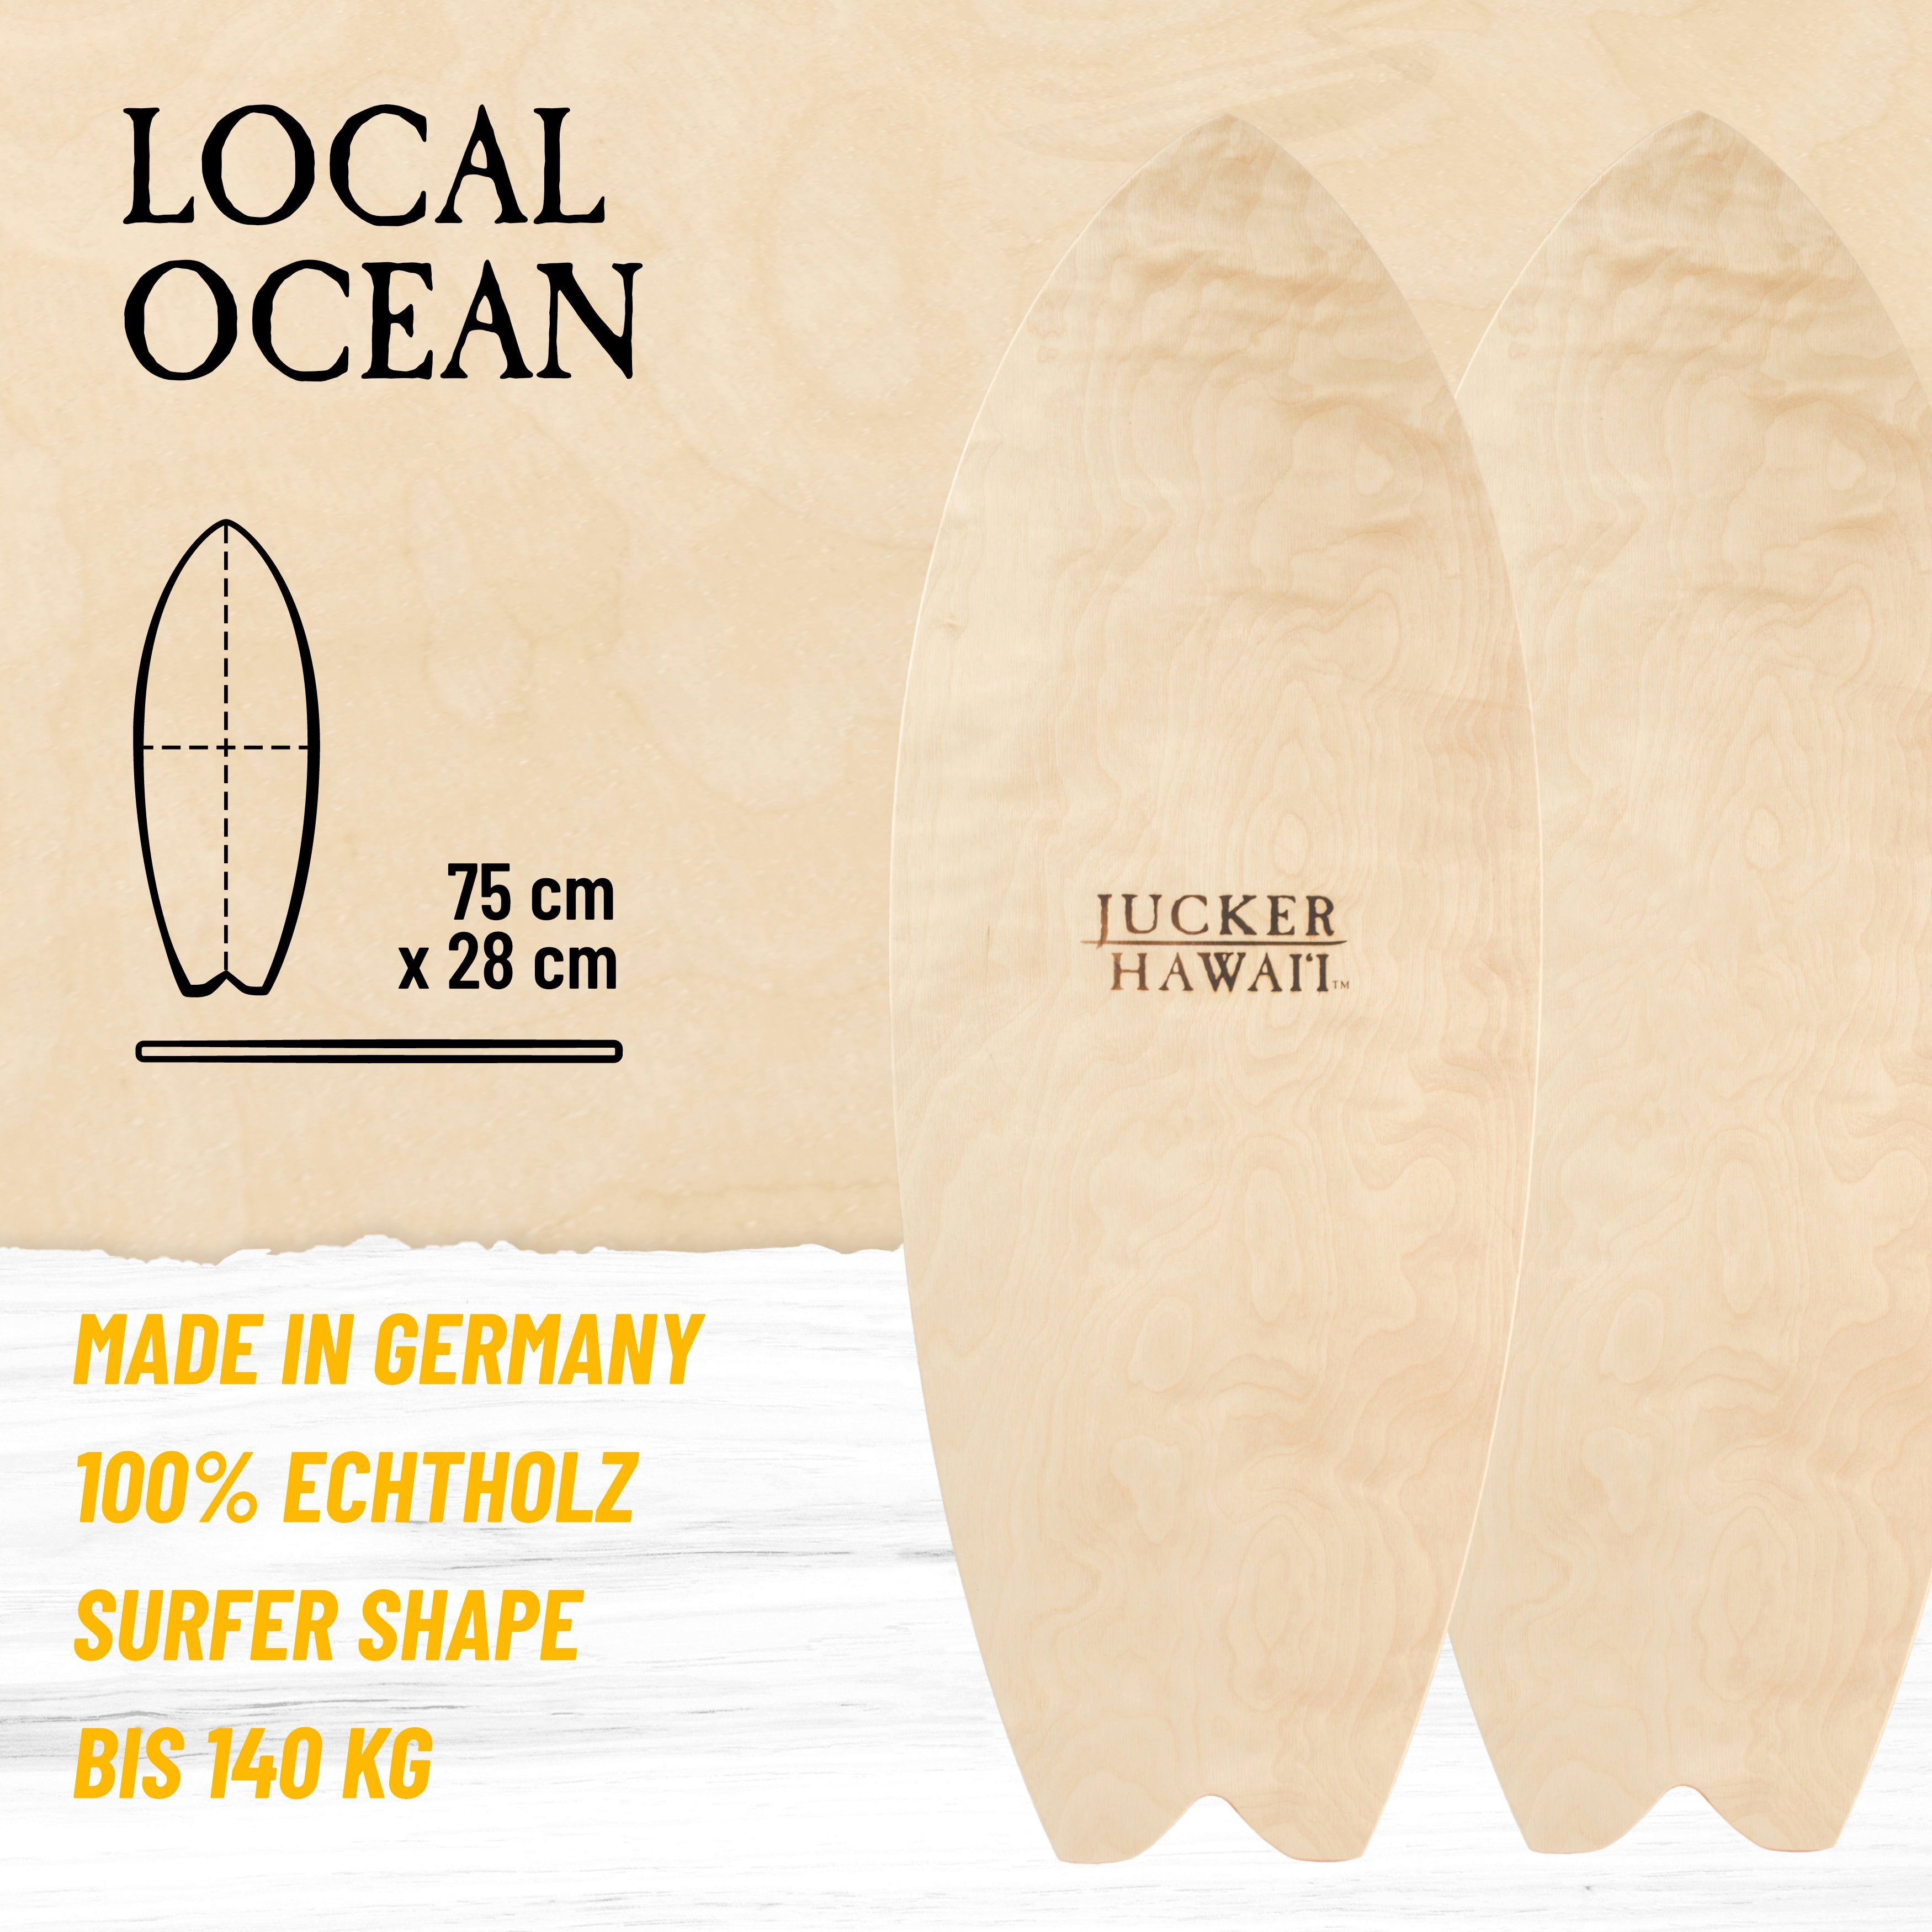 HAWAII aus Local Ocean Germany Made und Korkrolle Echtholz Balance inklusive 100% Korkmatte, in JUCKER Balanceboard Board